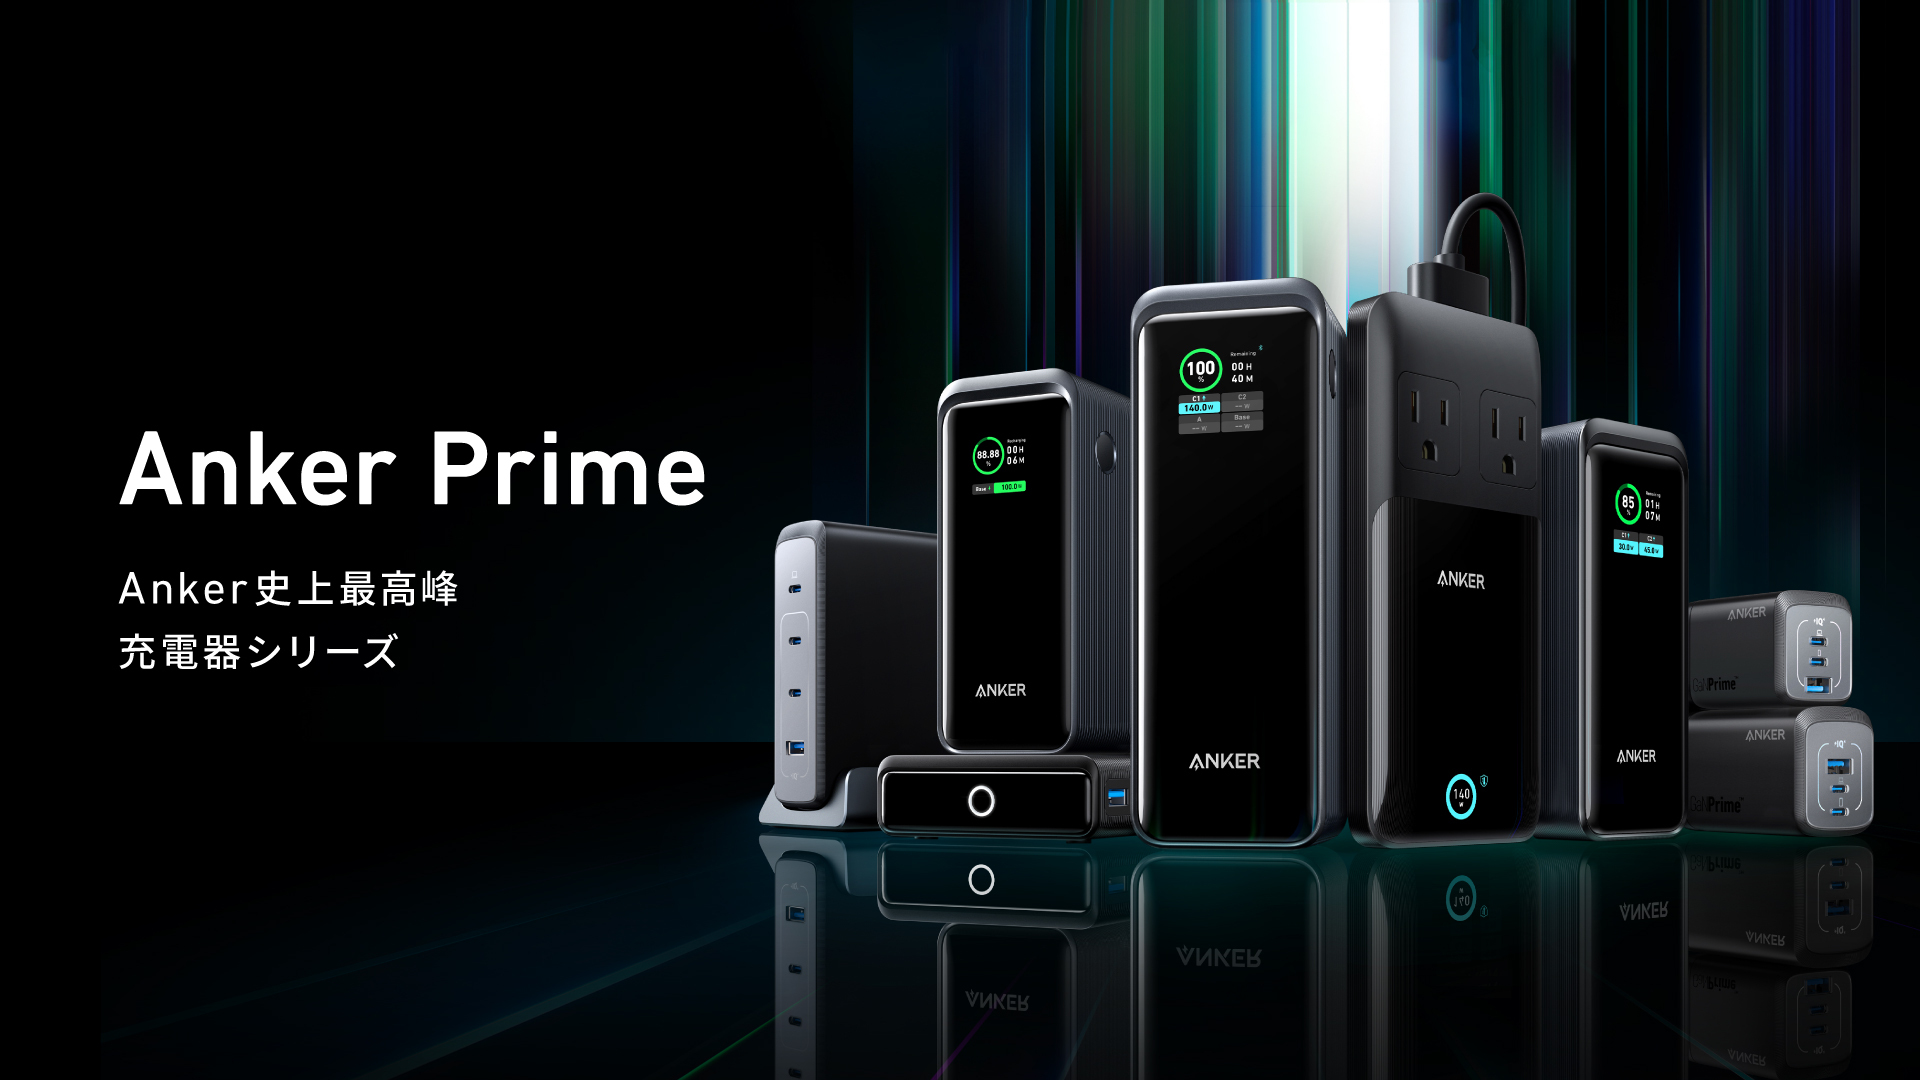 Anker史上最高峰の充電器シリーズ「Anker Prime」を発表。超高出力USB